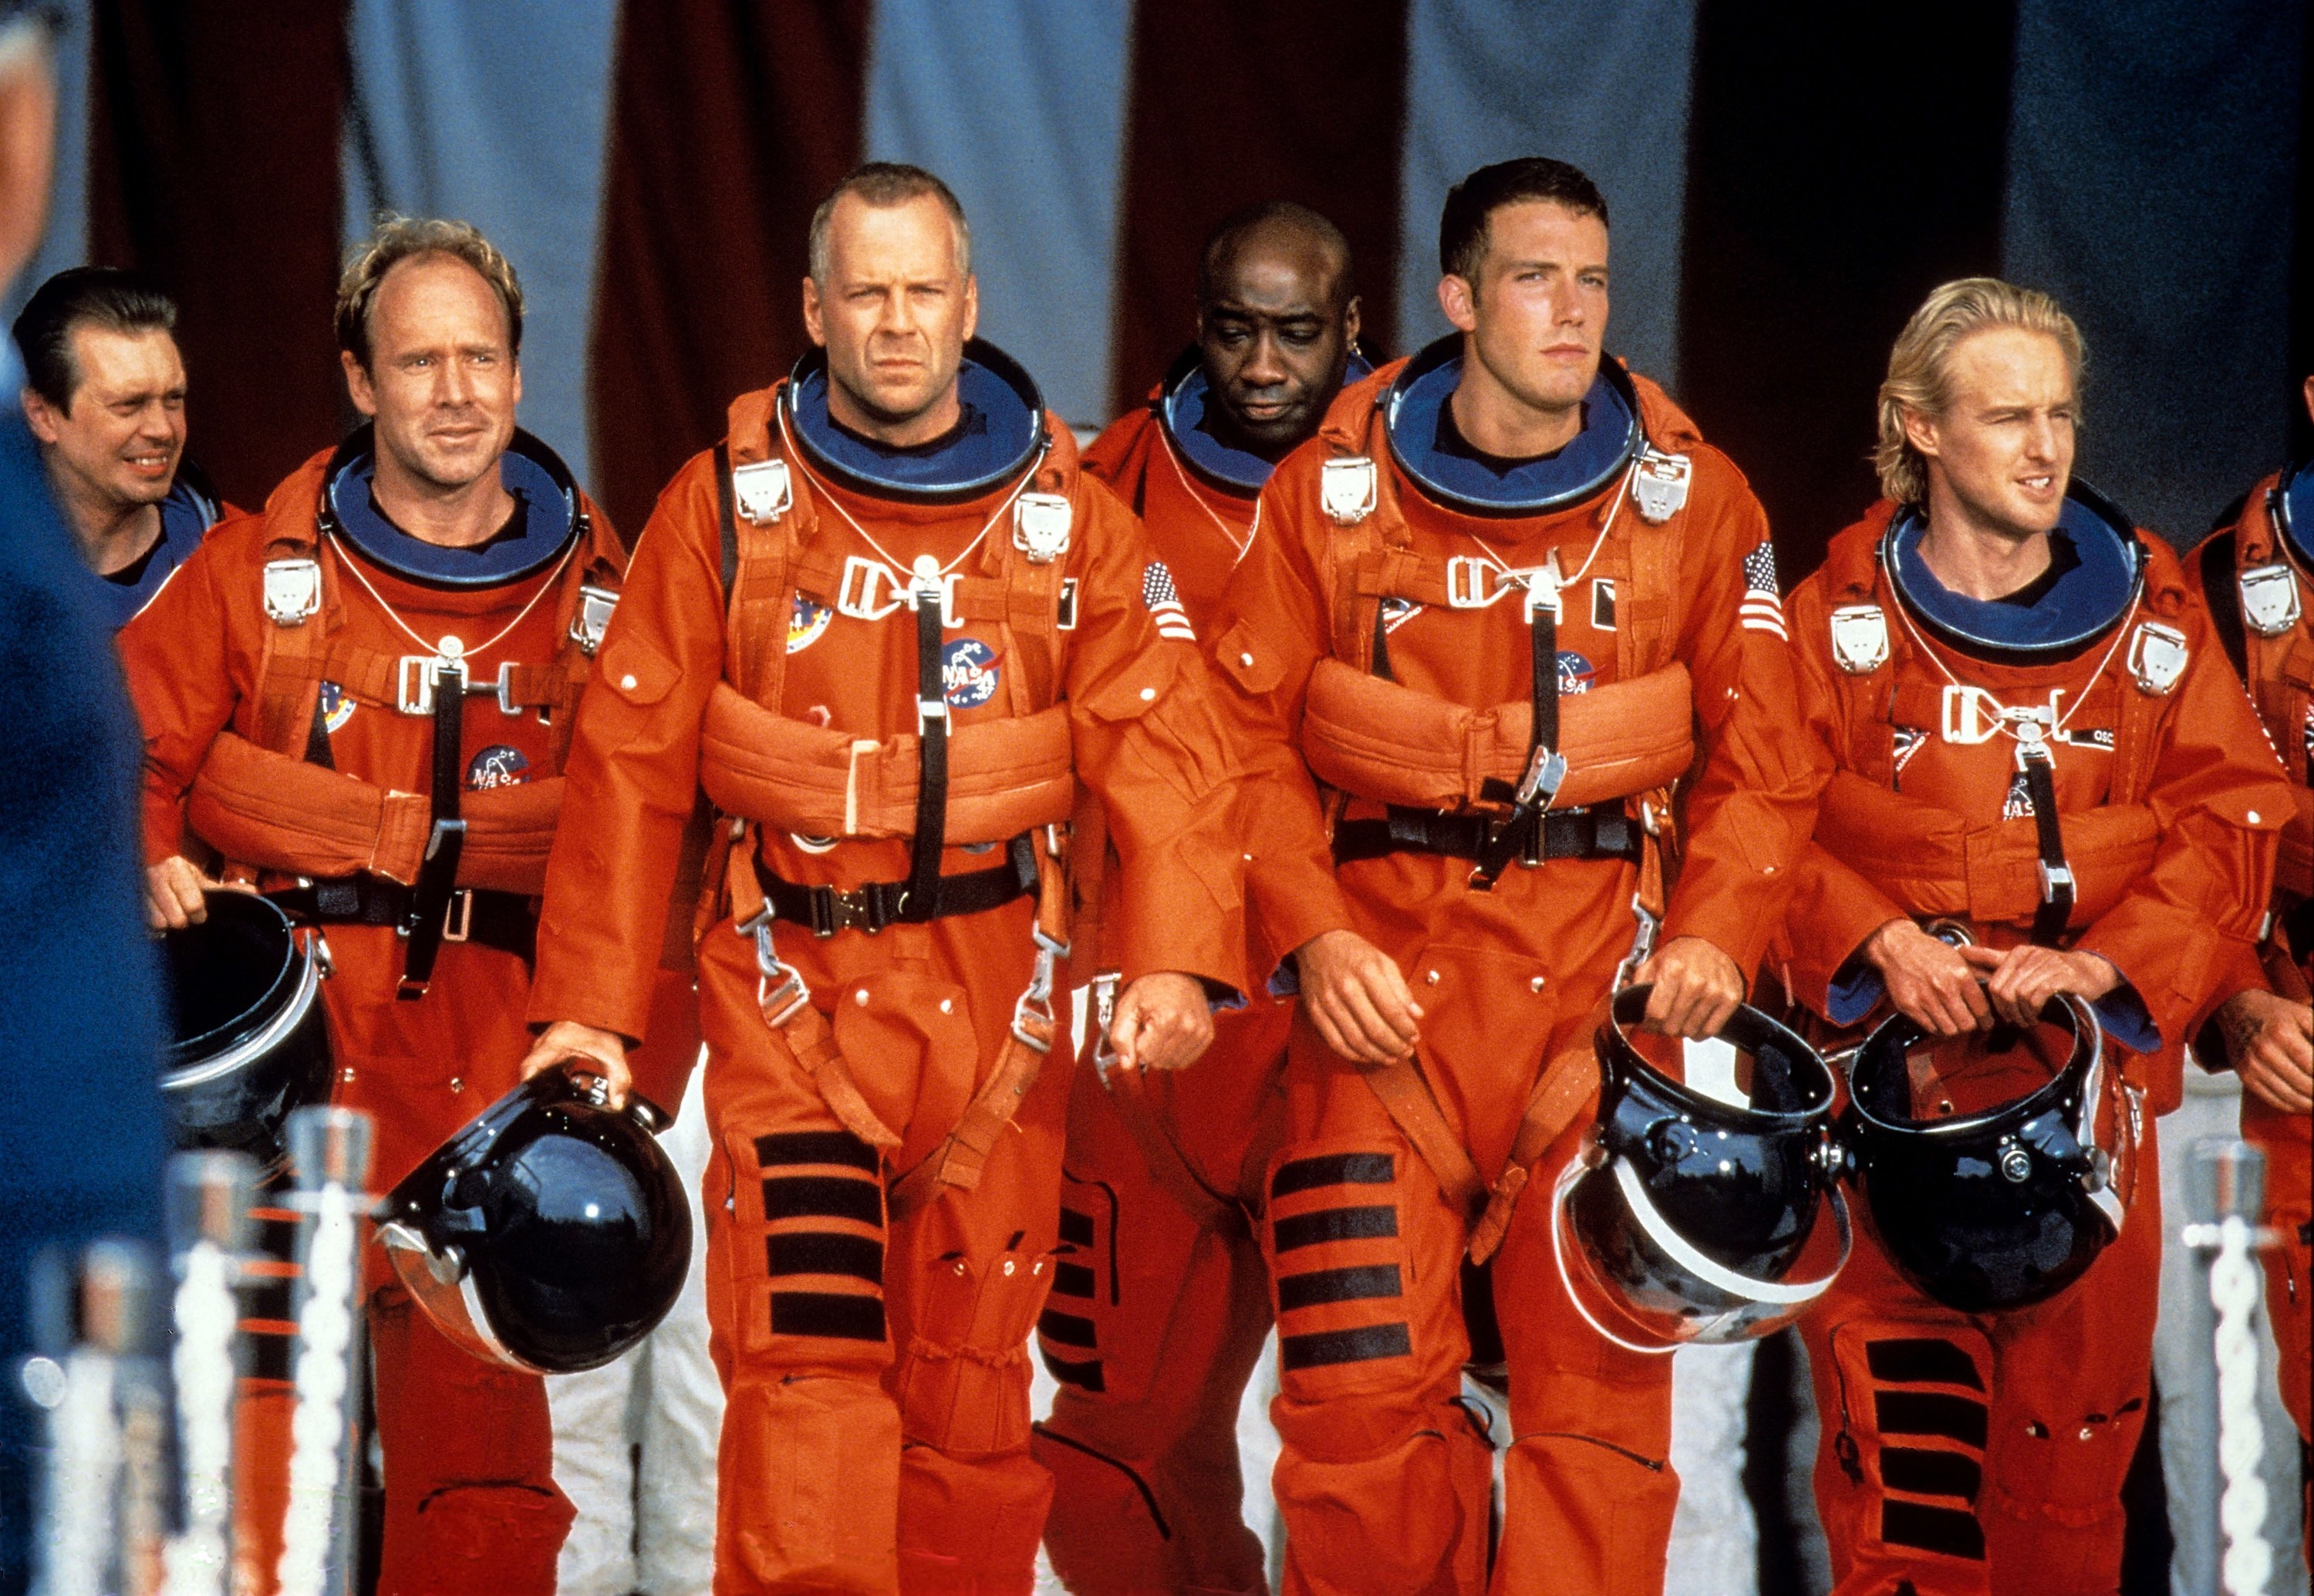 Steve Buscemi, Will Patton, Bruce Willis, Michael Clarke Duncan, Ben Affleck, Owen Wilson wearing space suite walking out onto the tarmac